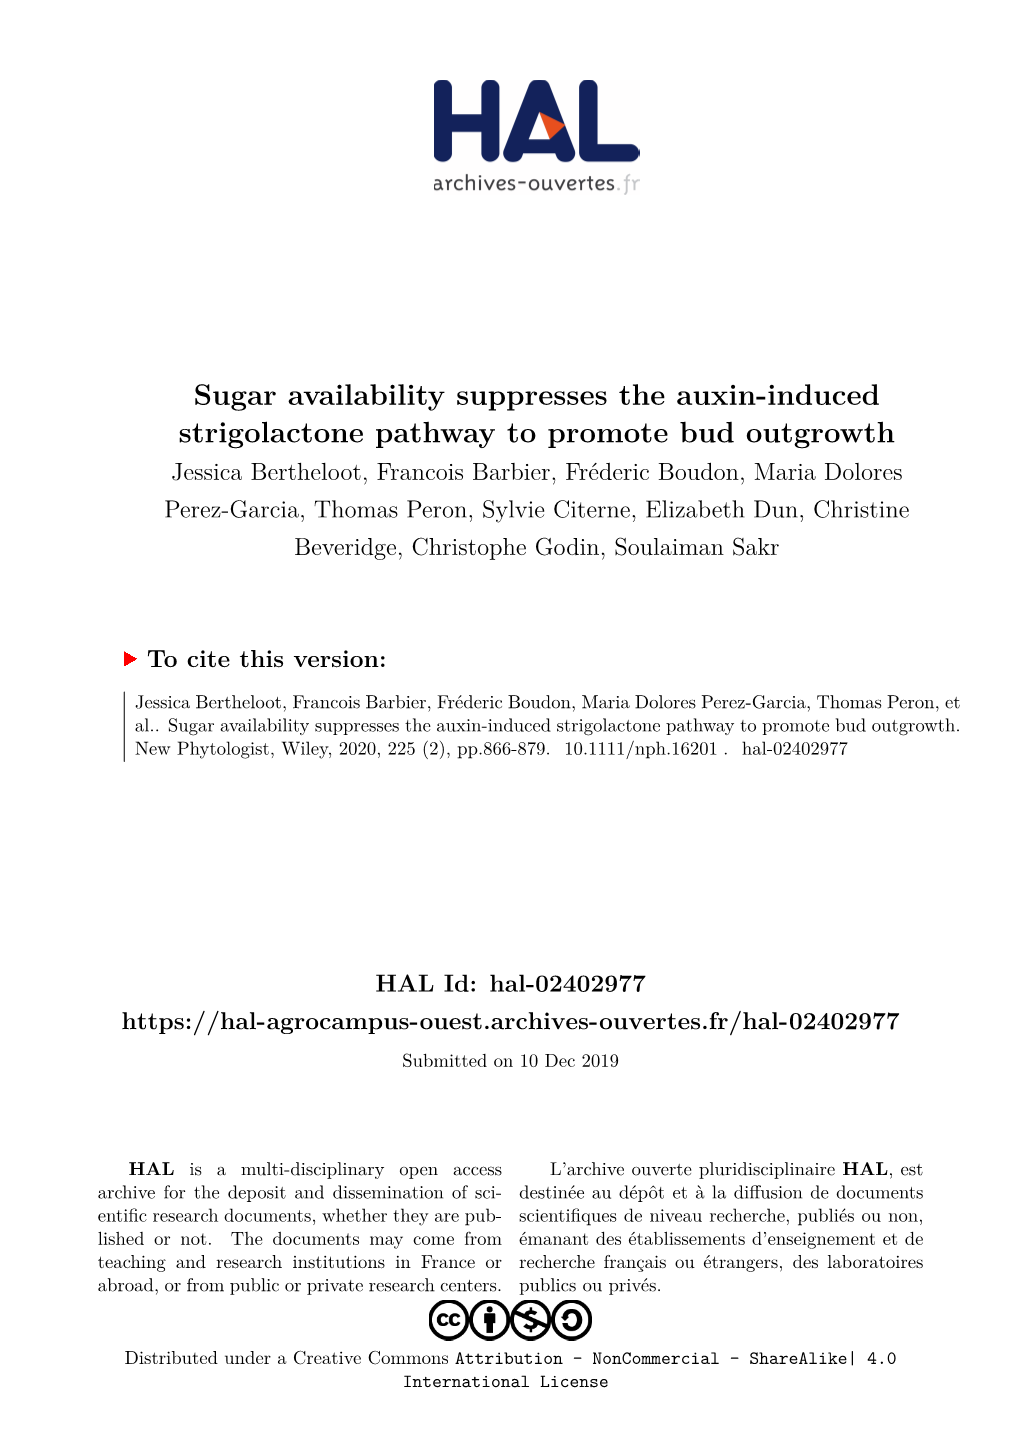 Sugar Availability Suppresses the Auxin-Induced Strigolactone